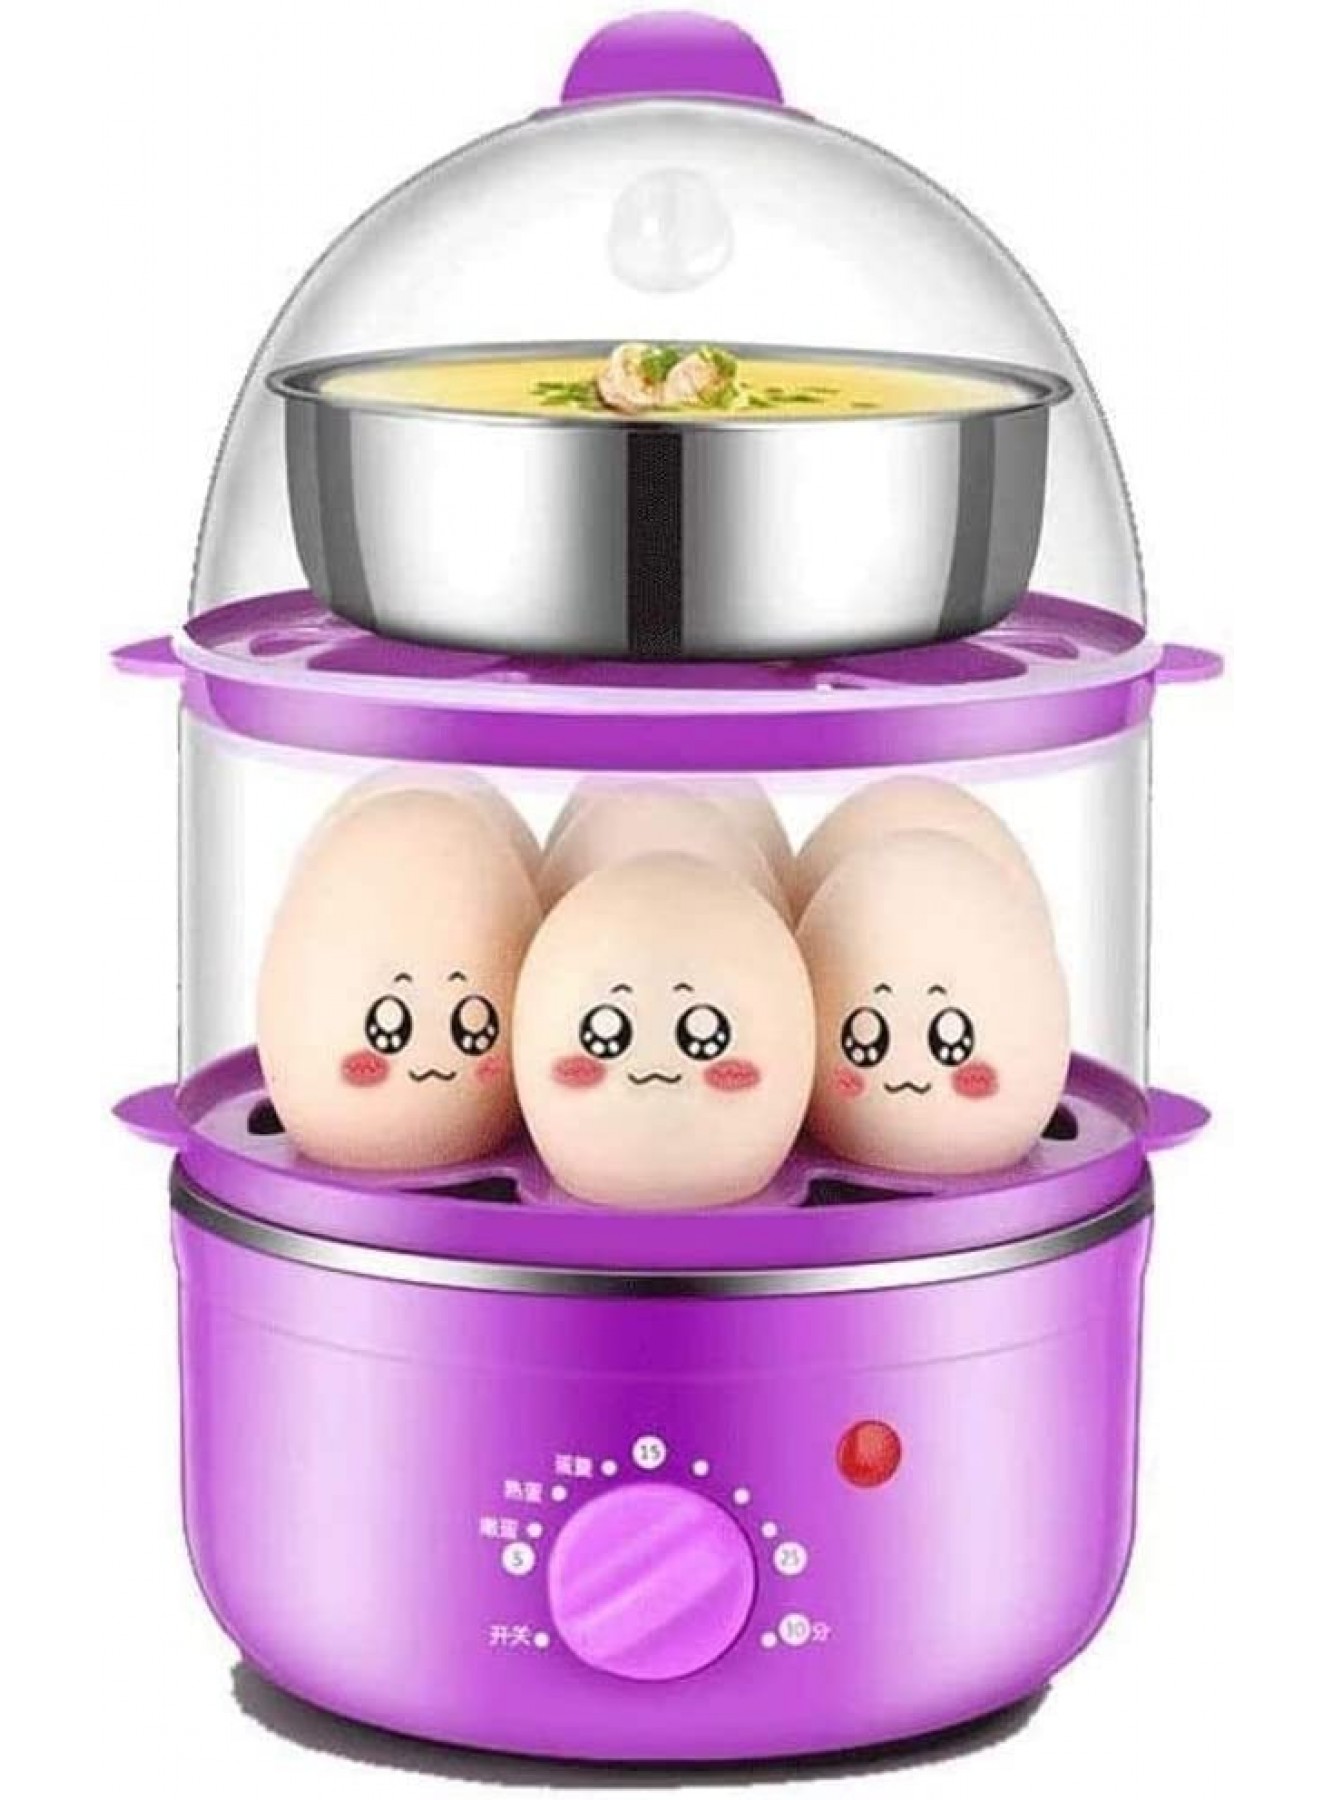 https://www.instagramscraperapi.com/image/cache/data/category_19/raxinbang-egg-boiler-egg-boiler-timed-double-layer-steamer-auto-cut-off-for-perfect-2633-1335x1800.jpg